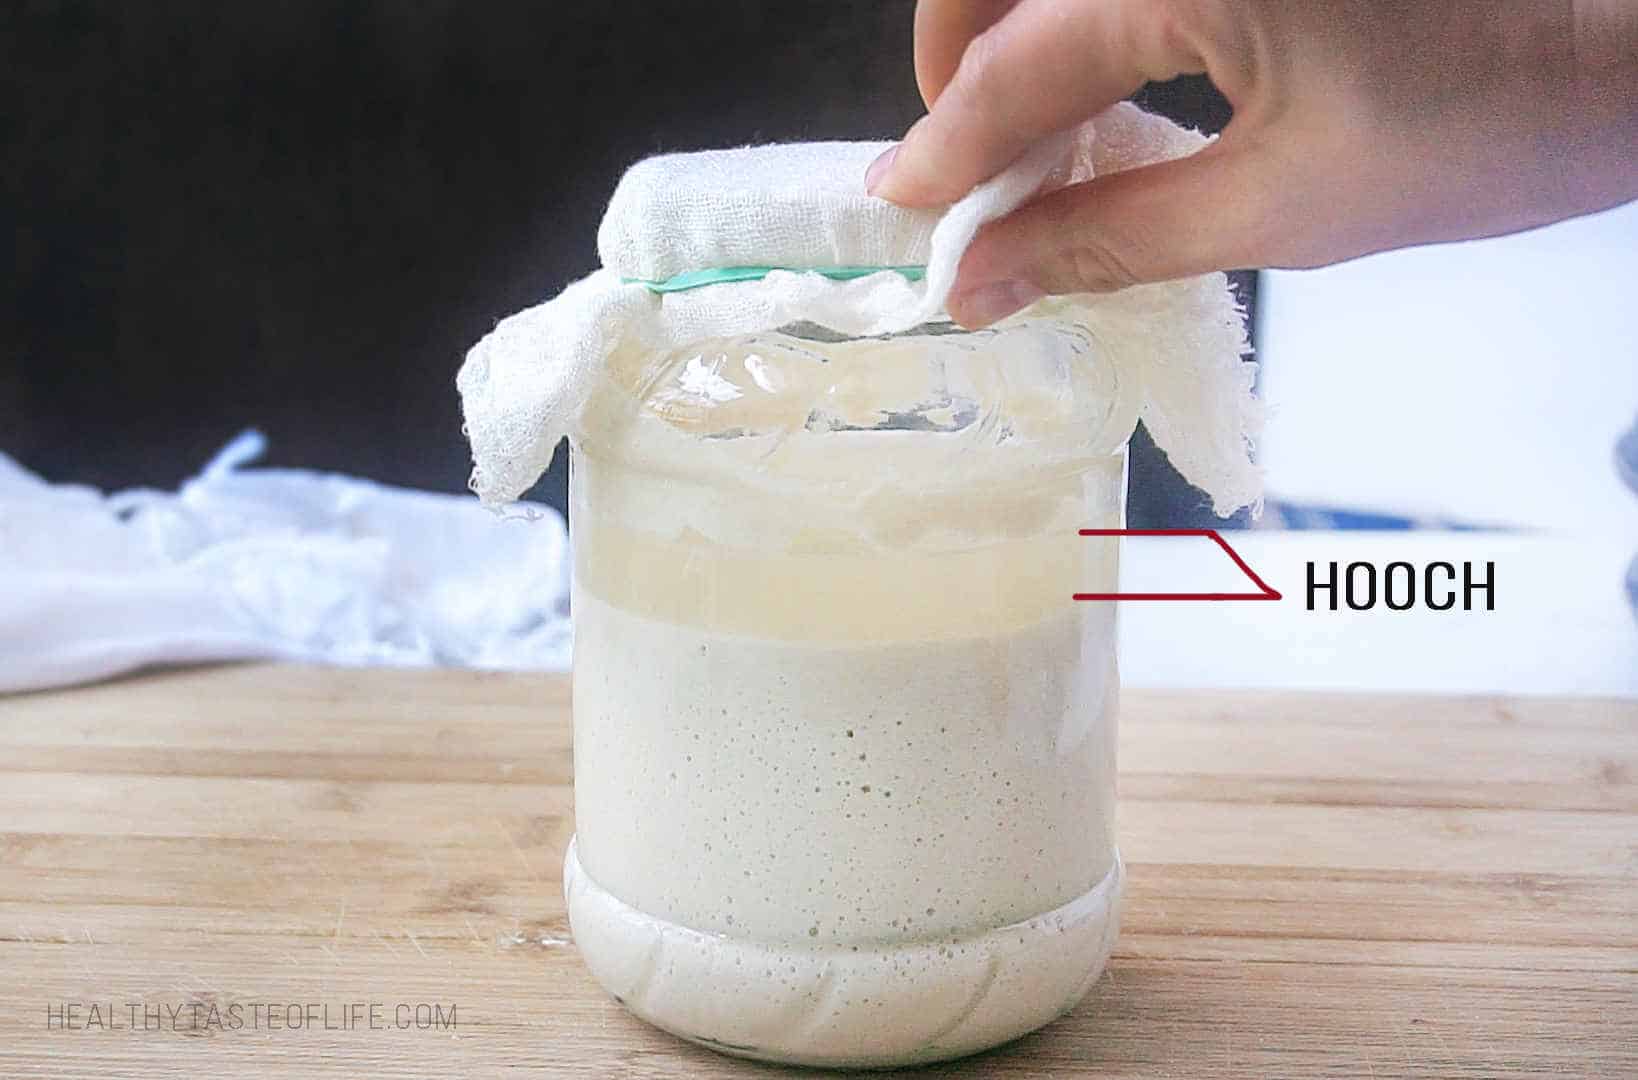 The gluten free sourdough starter has a layer of liquid on top called hooch